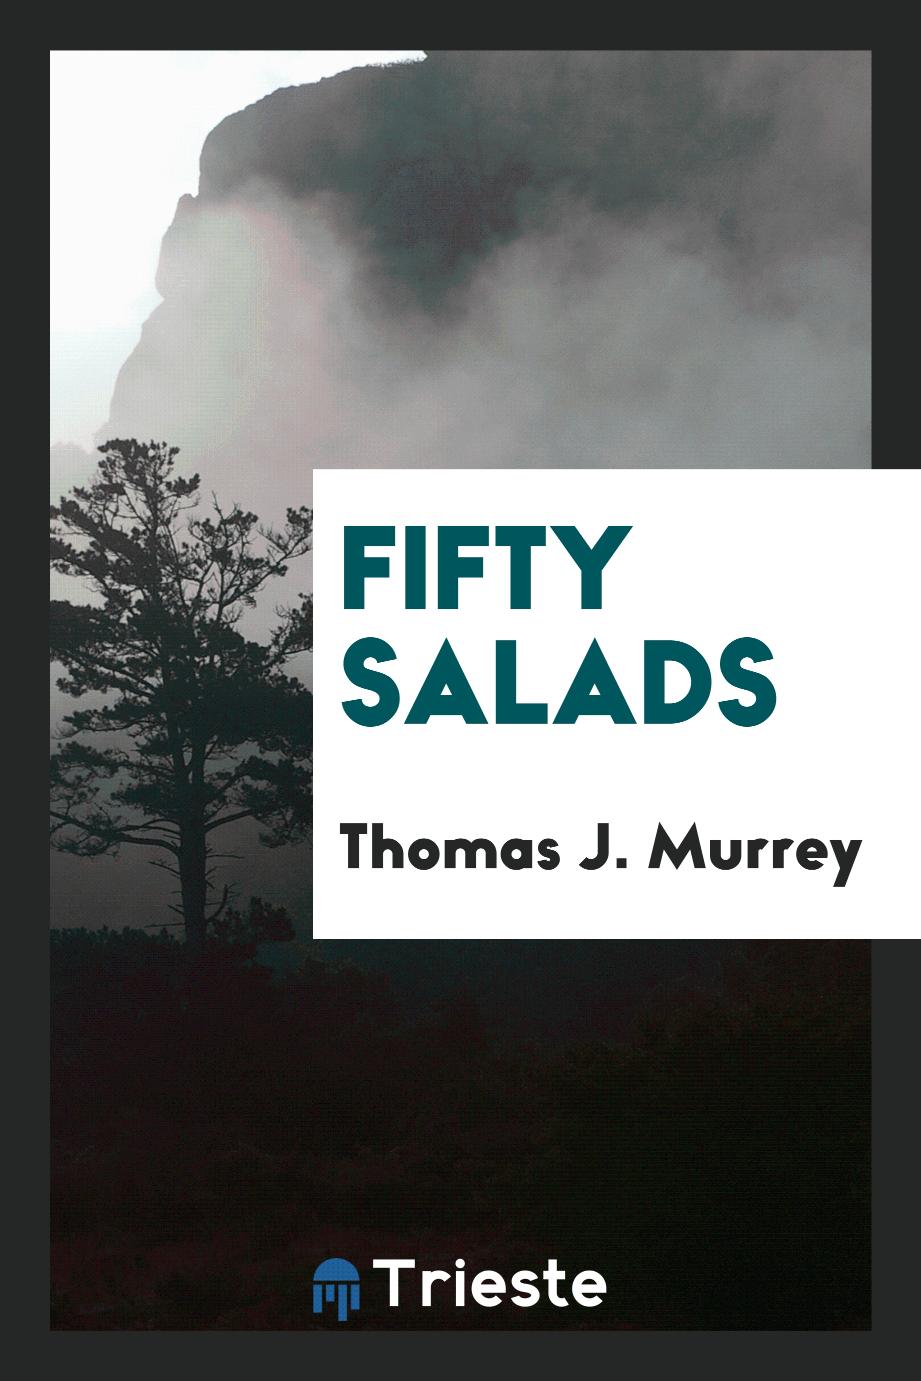 Fifty salads